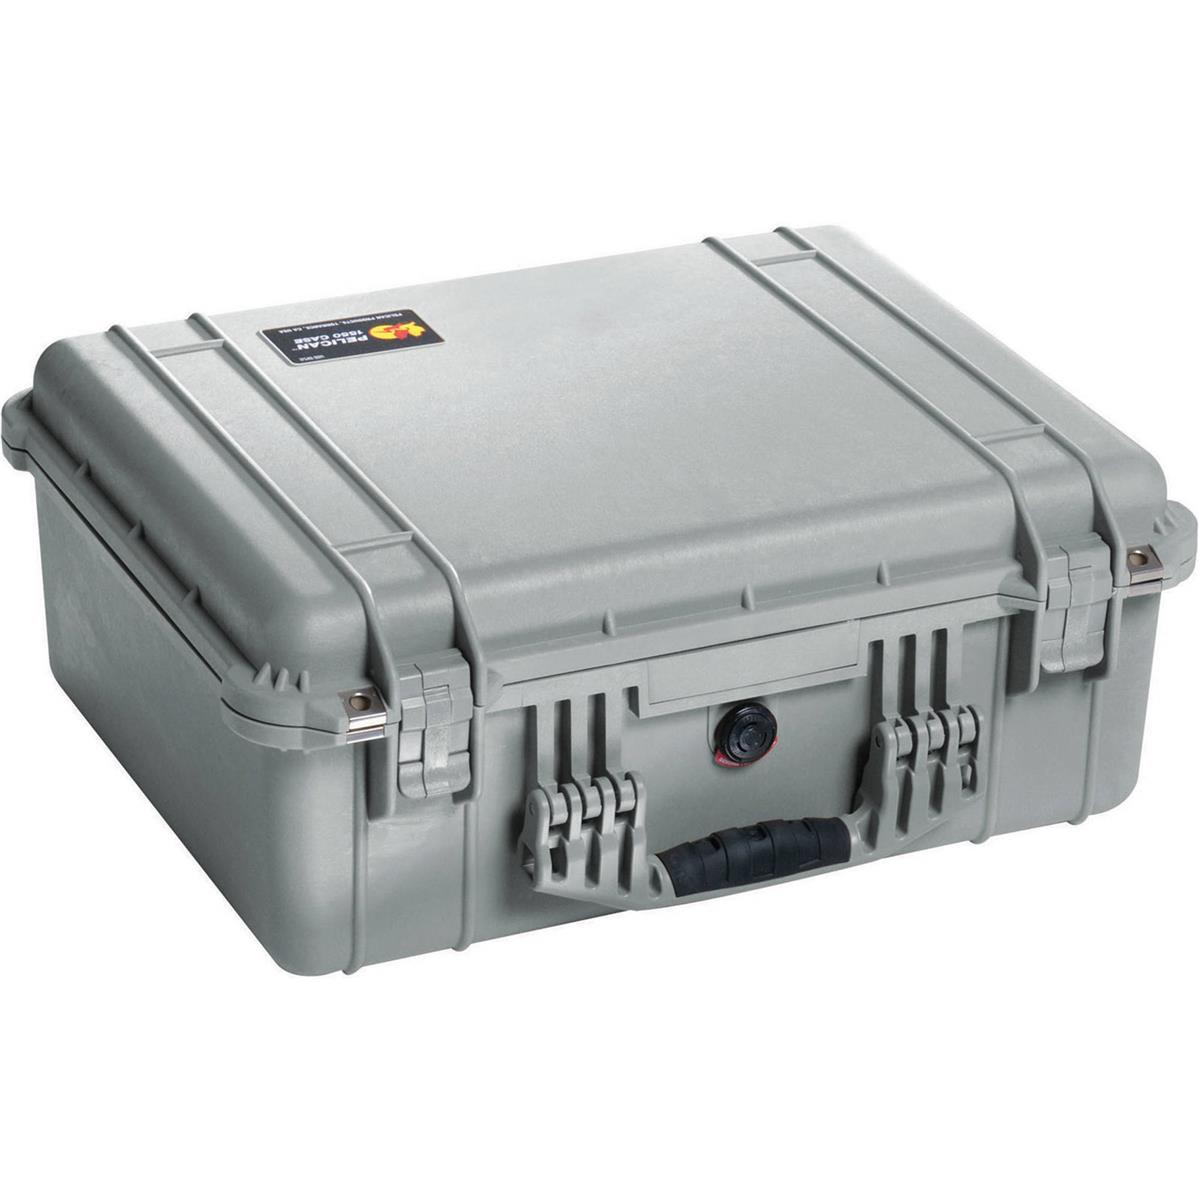 Photos - Camera Bag Pelican 1550 Watertight Hard Case with Foam Insert - Silver  1550-00 (Gray)